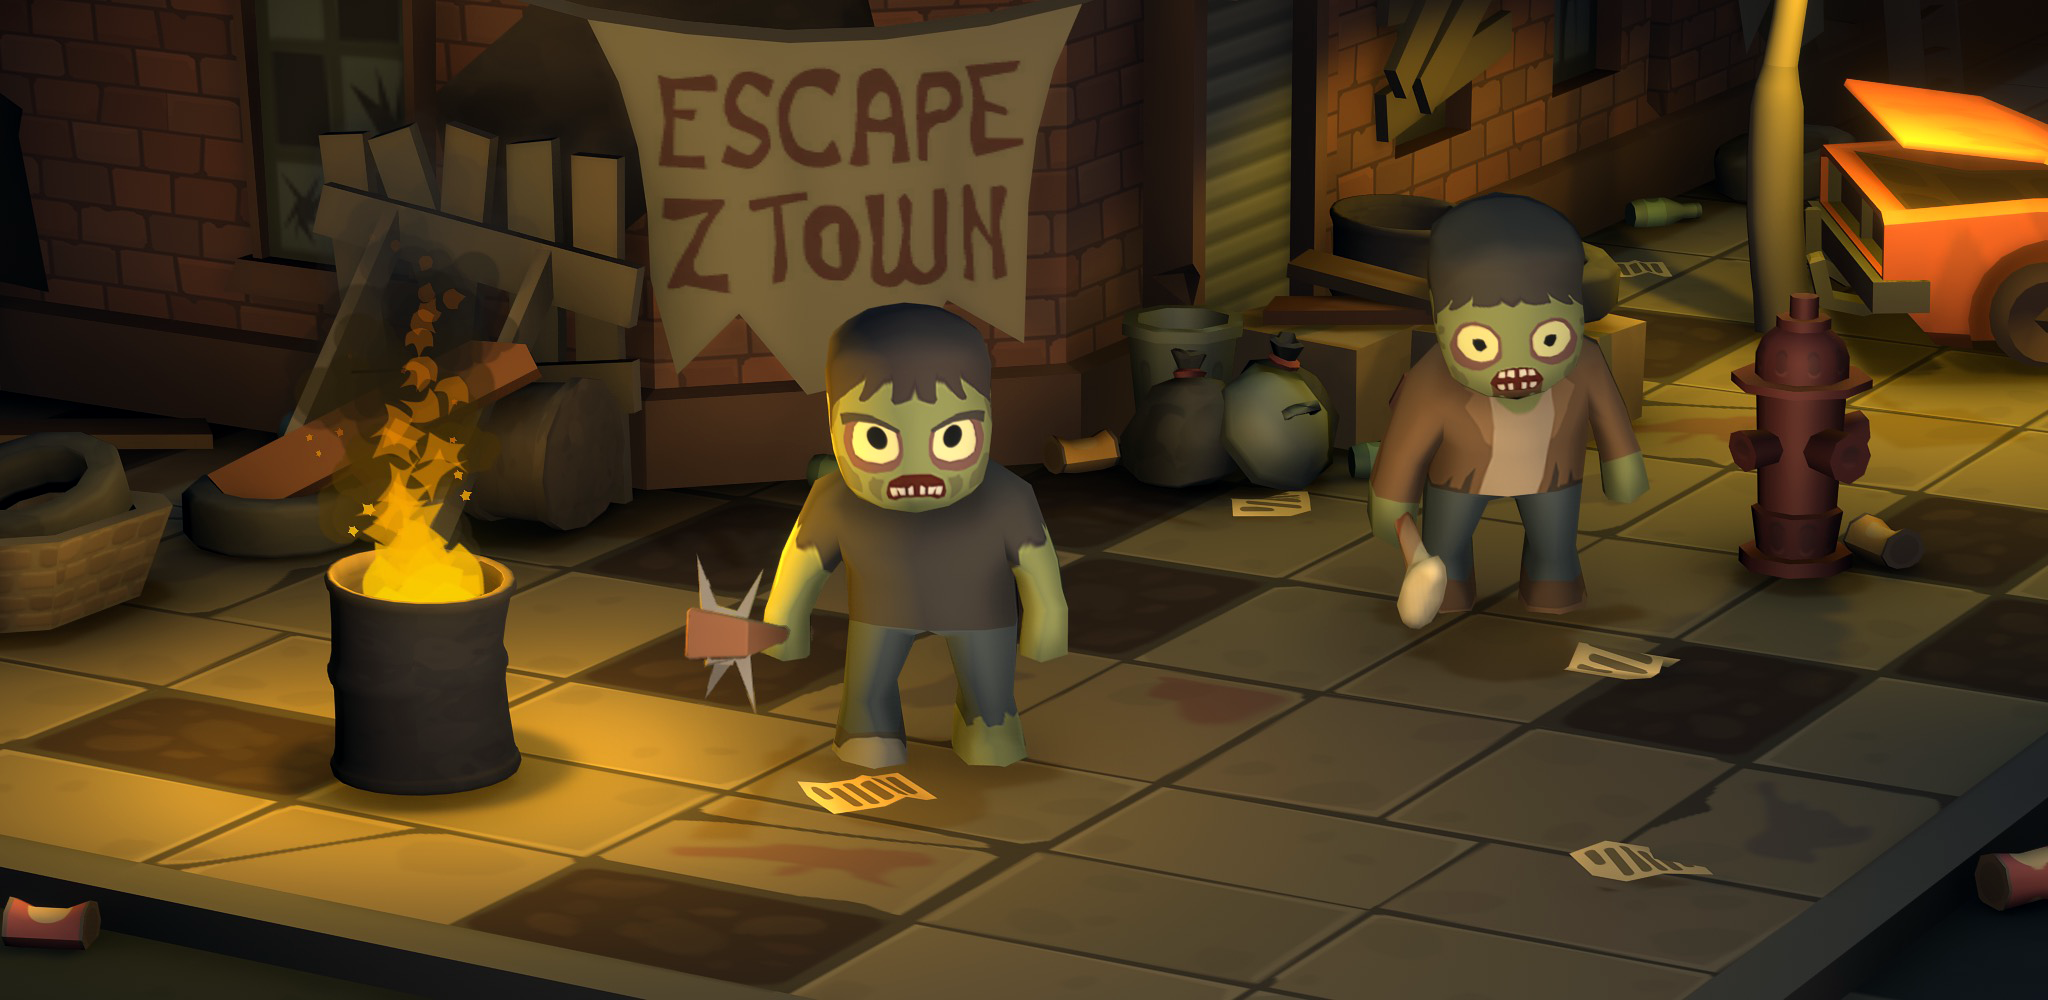 Slide 2 game escape z town